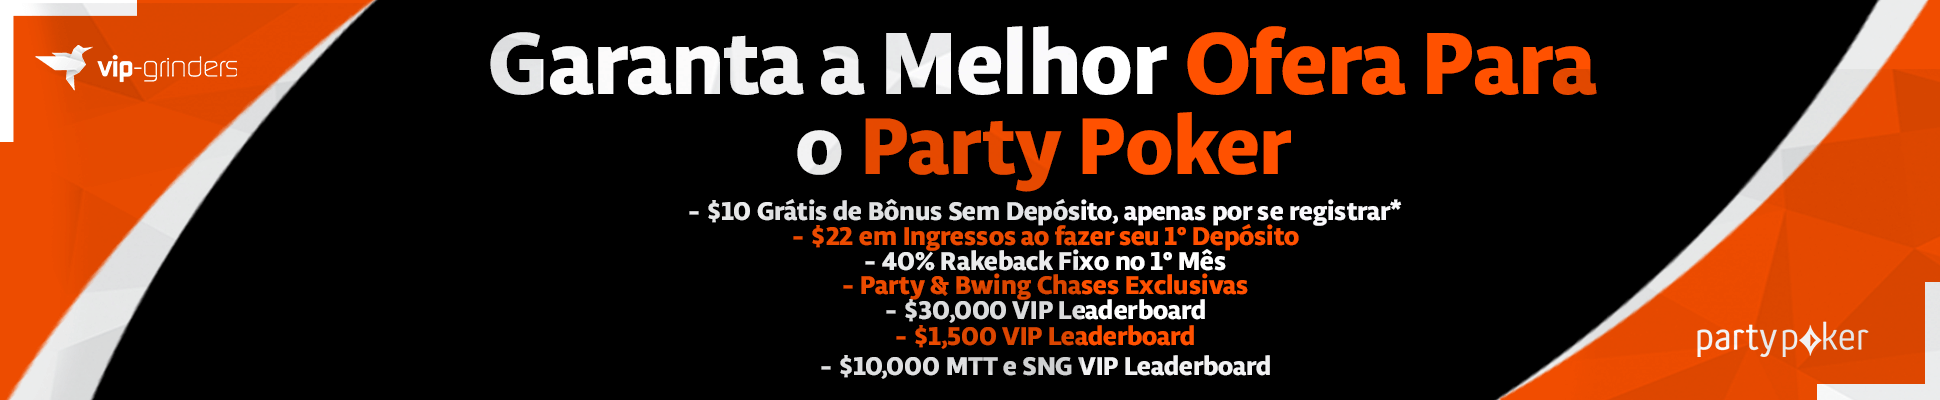 Melhor Oferta party poker